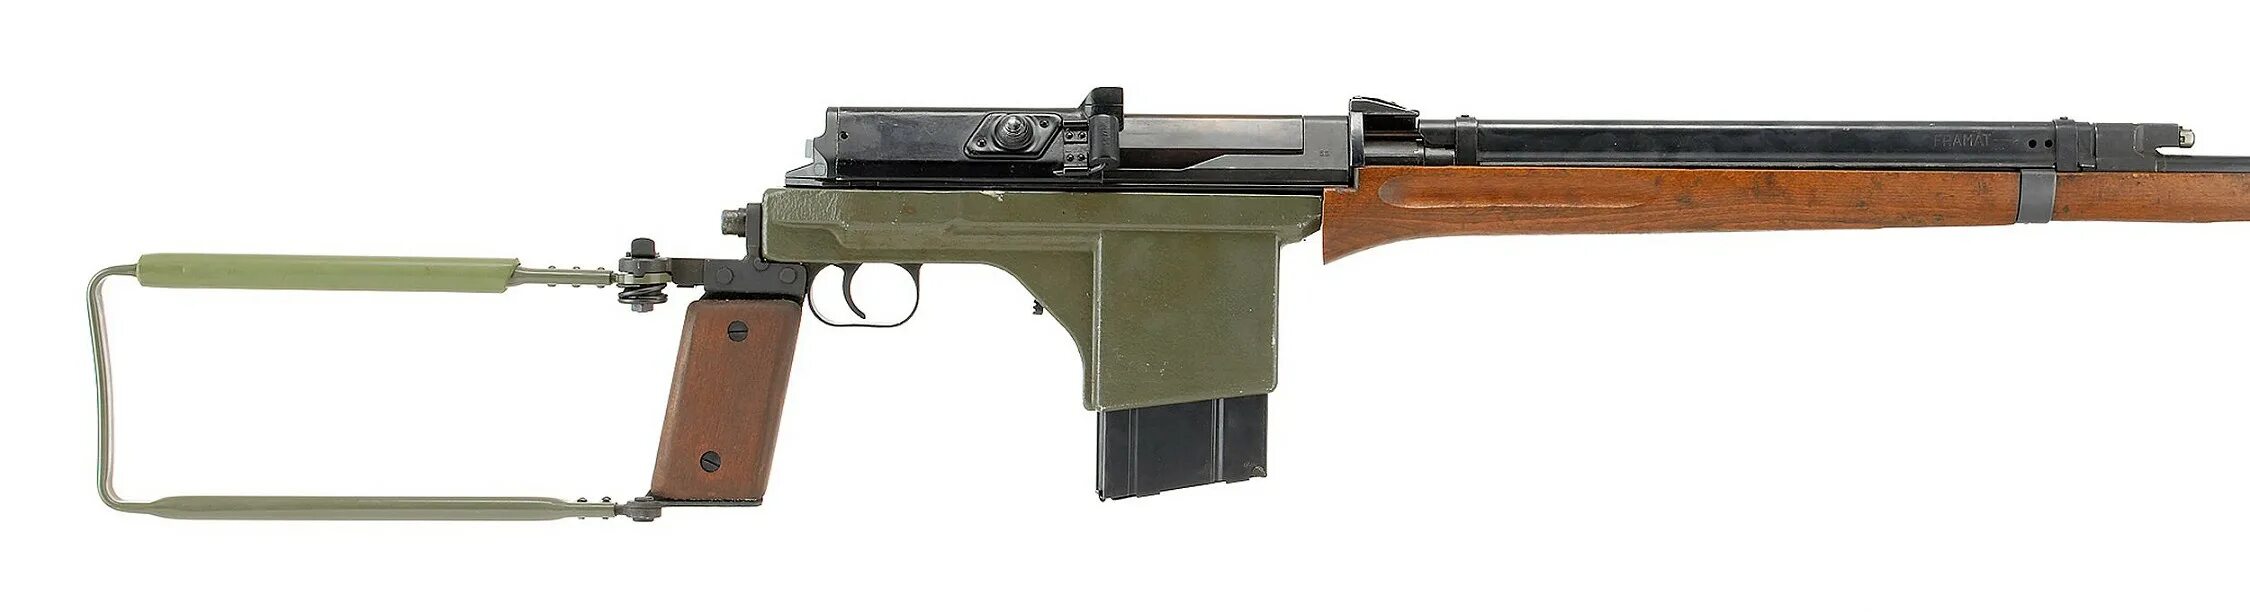 M 42 24. ПТР «Carl Gustav» m/42. Carl Gustav PVG M/42. Противотанковое ружье Carl Gustav PVG M/42.. Шведская винтовка АГ-42.